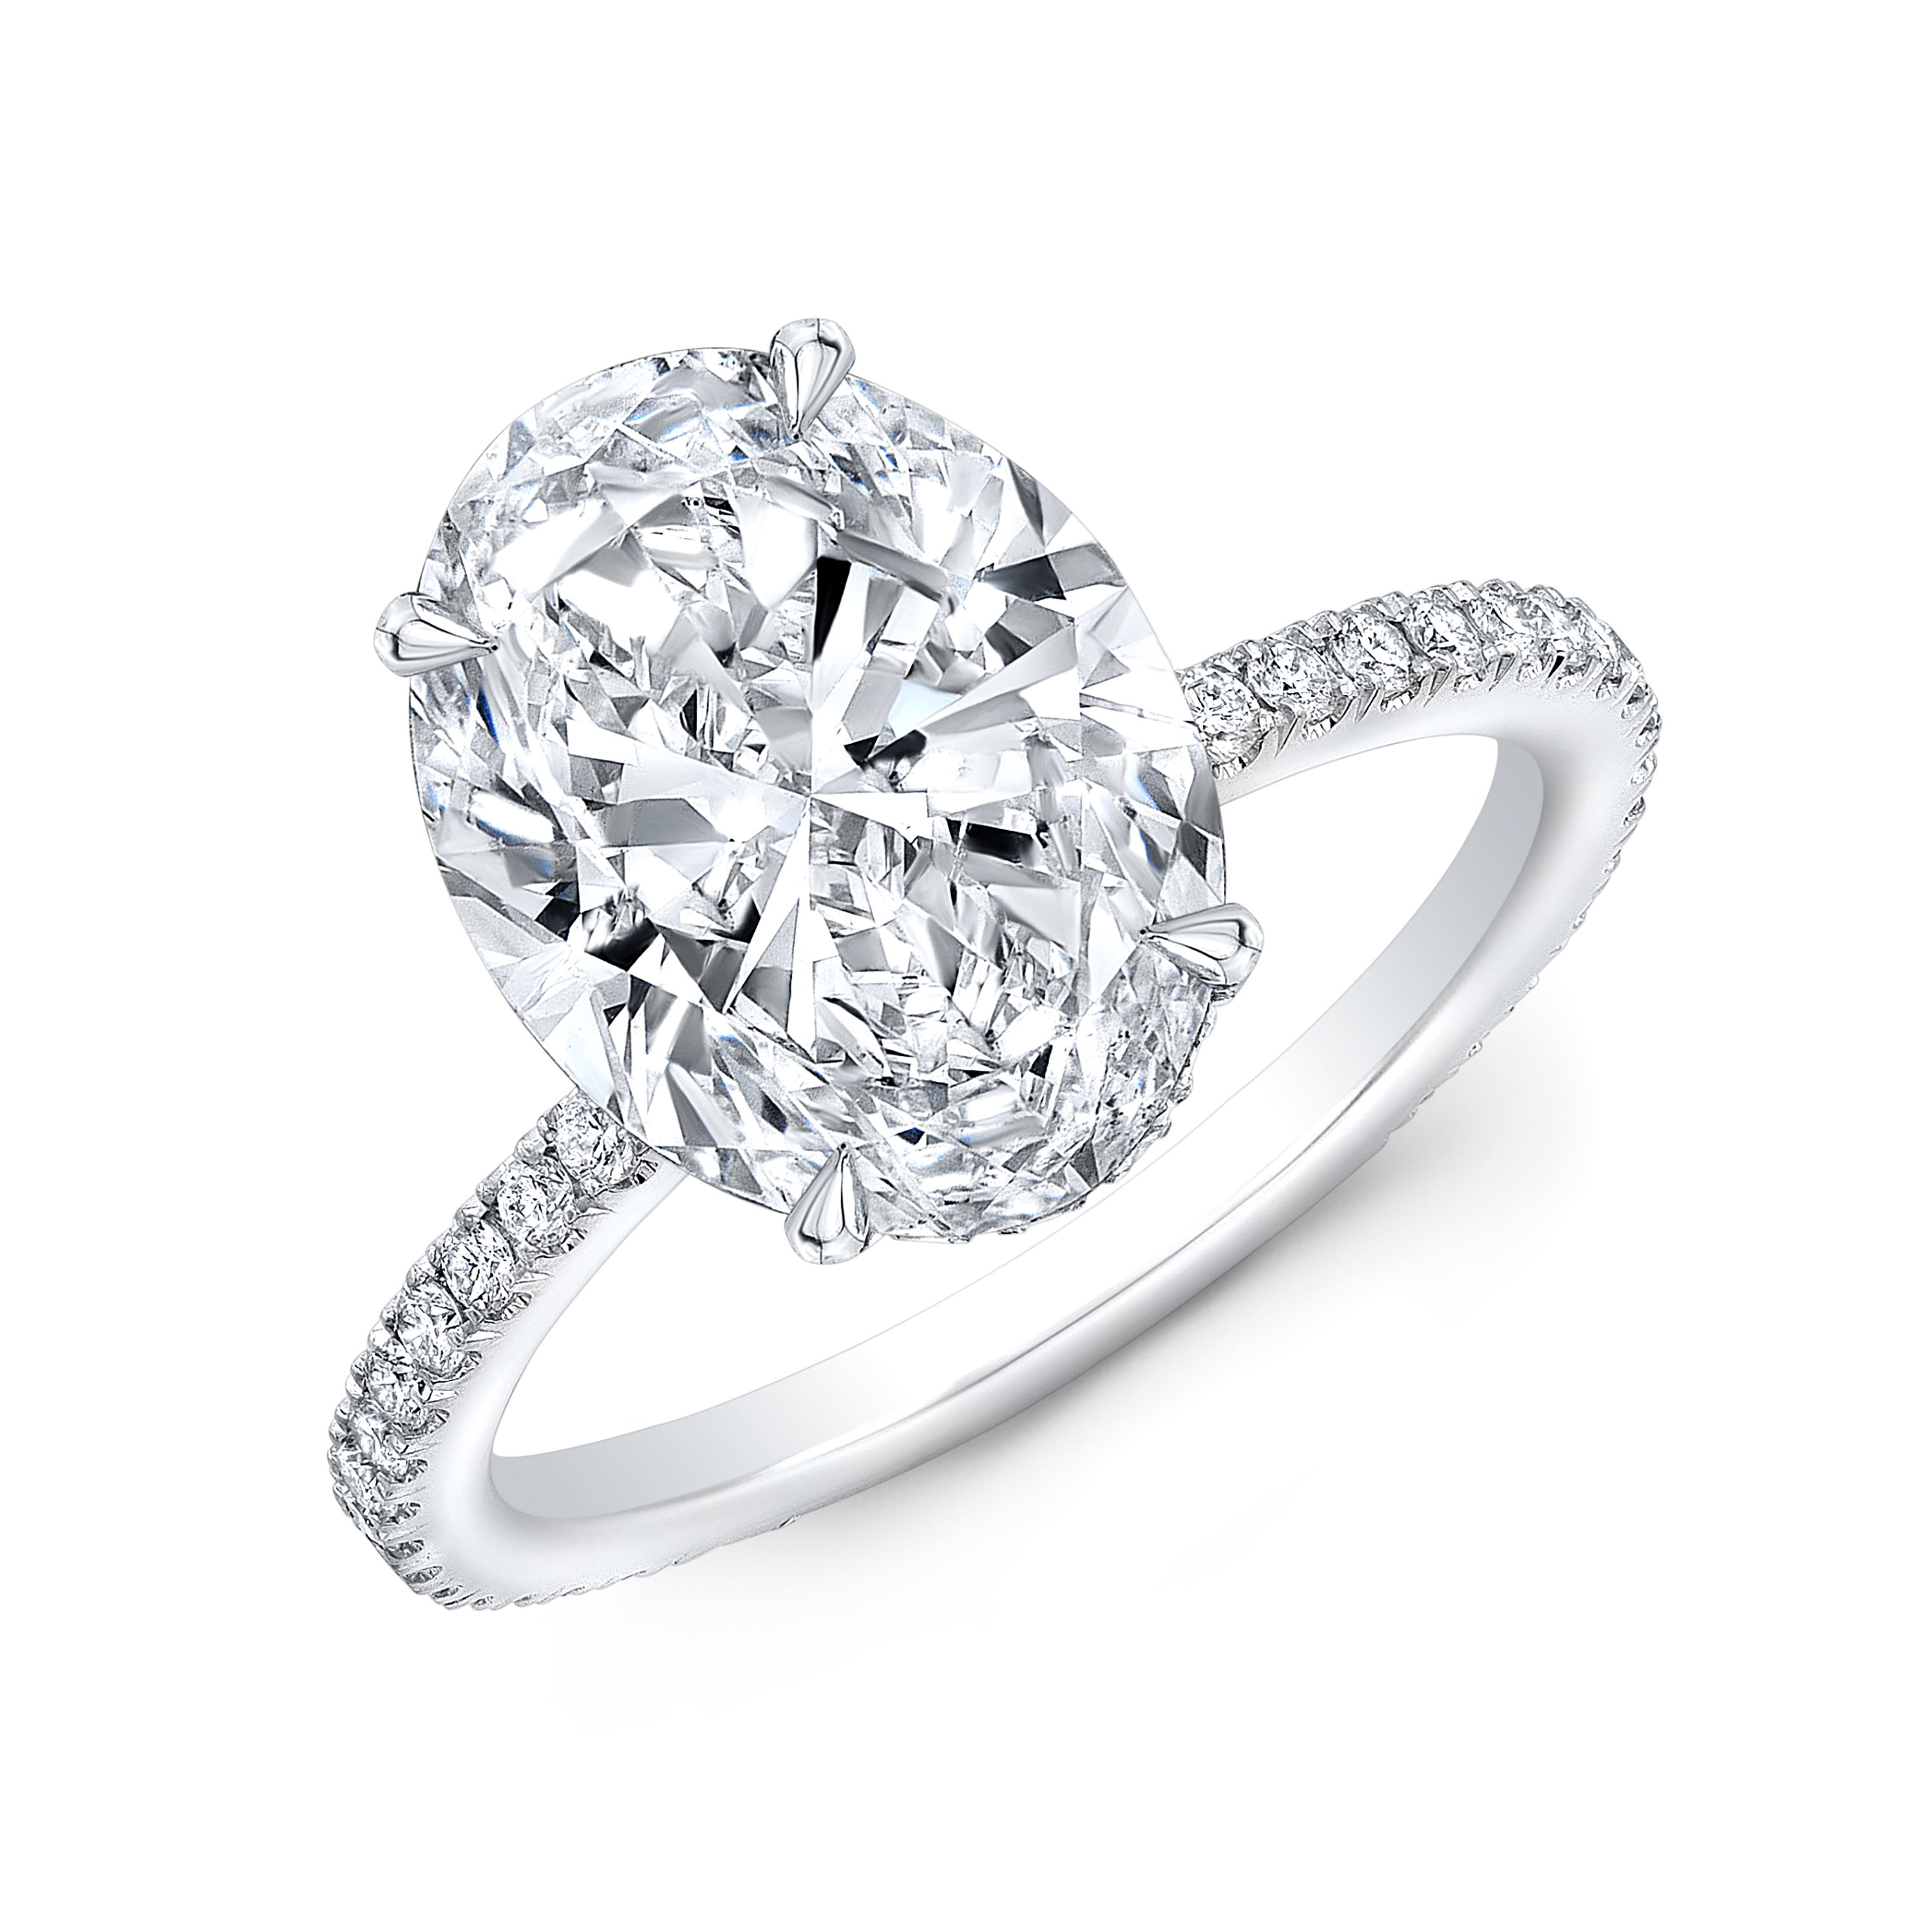 https://www.diamondmansion.com/media/catalog/product/design/PAV-6318/colorless/white/oval/1615427307-Oval-Ultra-Thin-Hidden-Halo-Pave-Diamond-Engagement-Profile-White-Gold.jpg